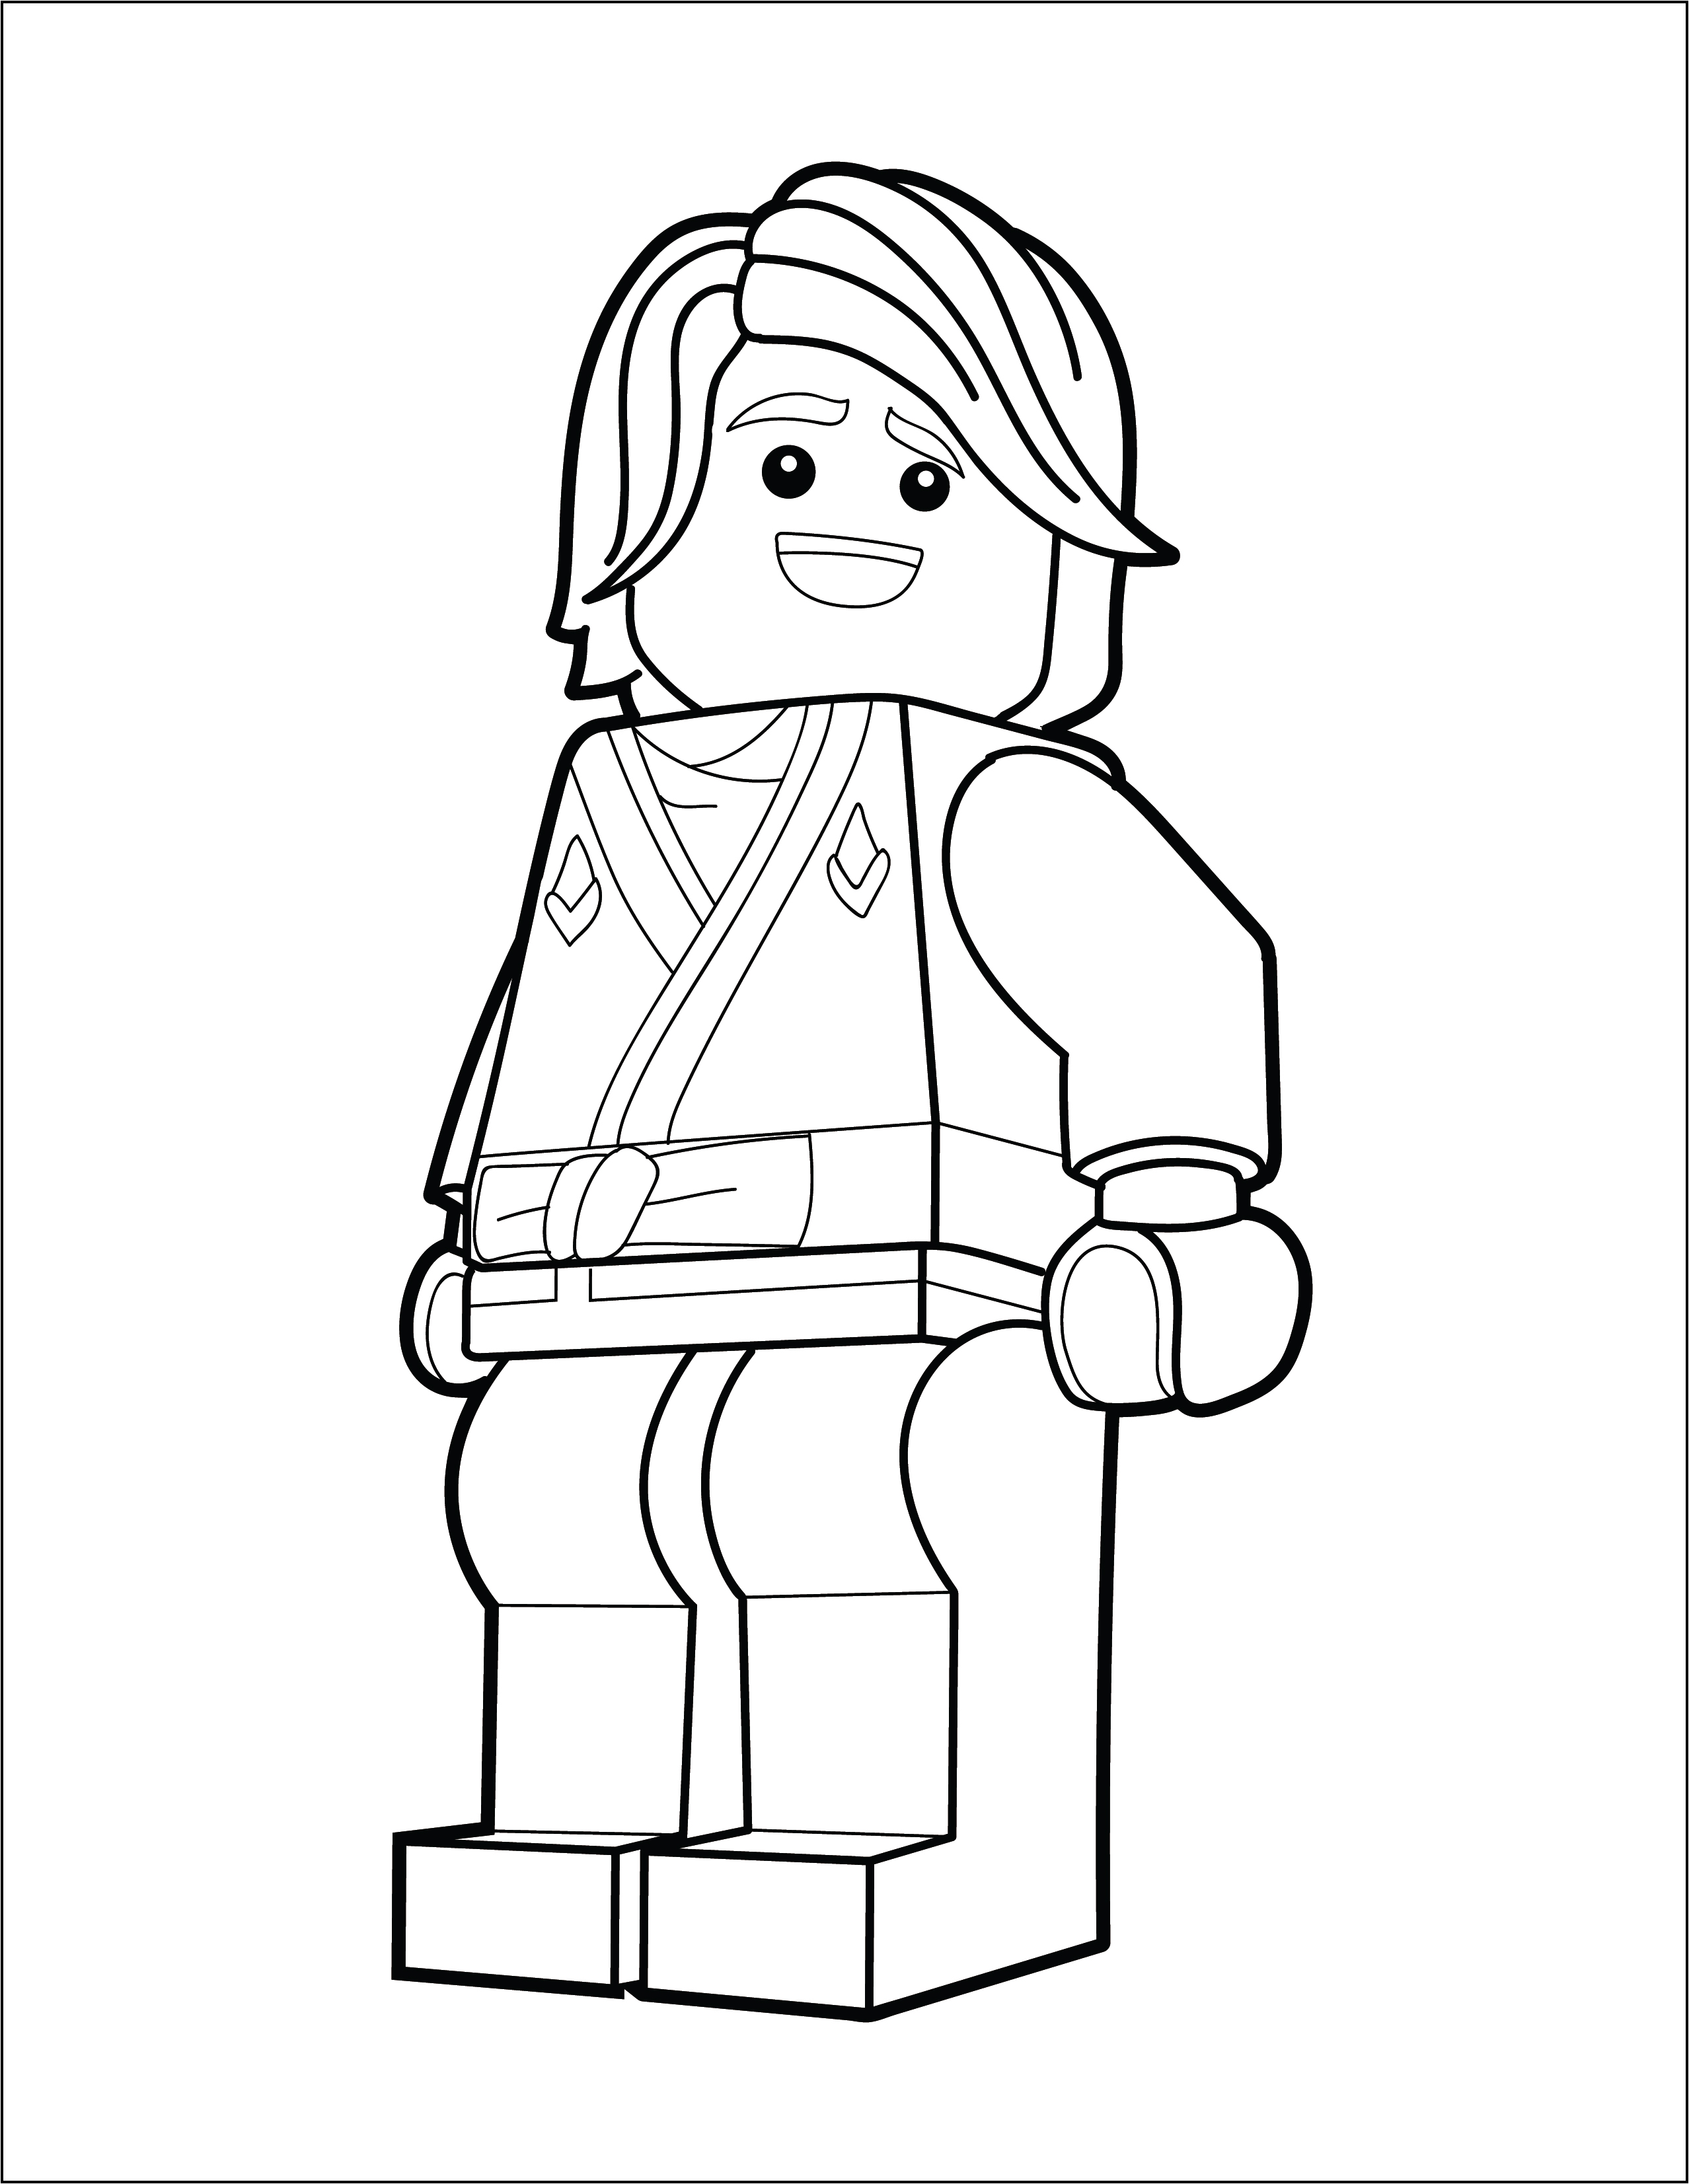 Lego ninjago coloring page